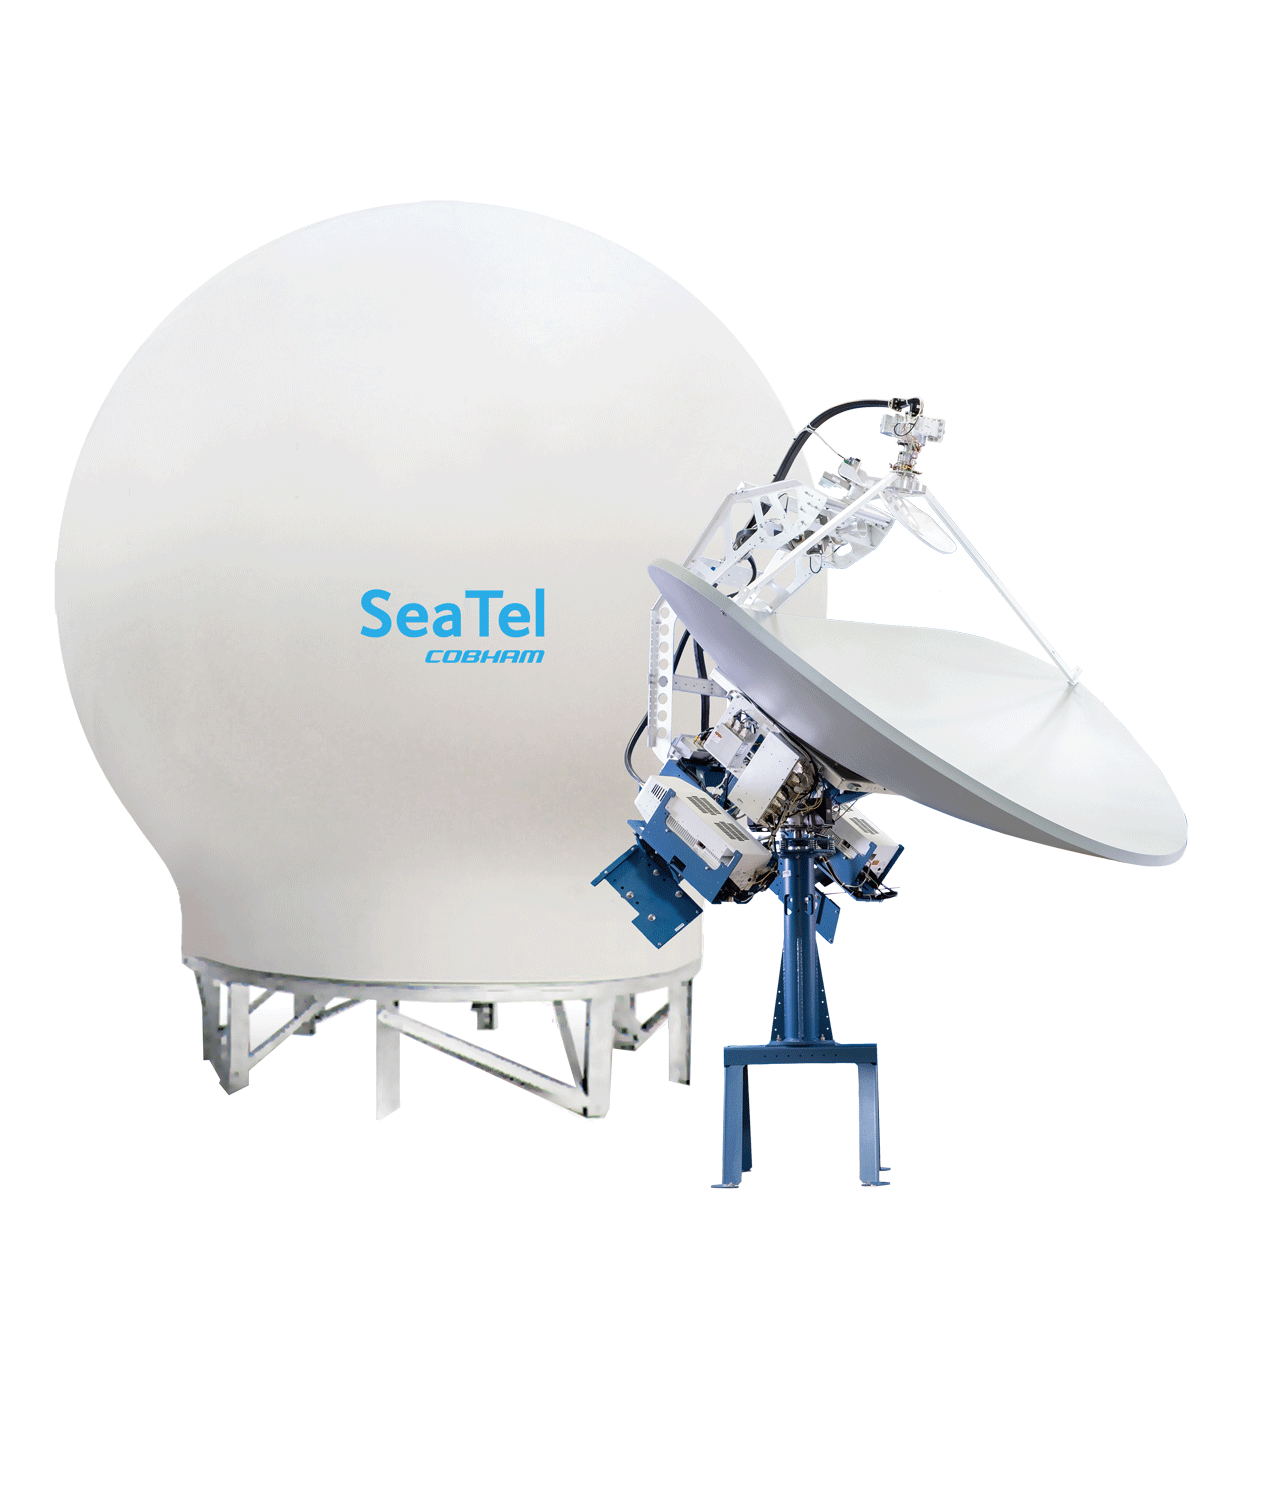 Cobham Satcom’s Sea Tel 2400 multiband VSAT platform tested for SES’s O3b mPOWER system